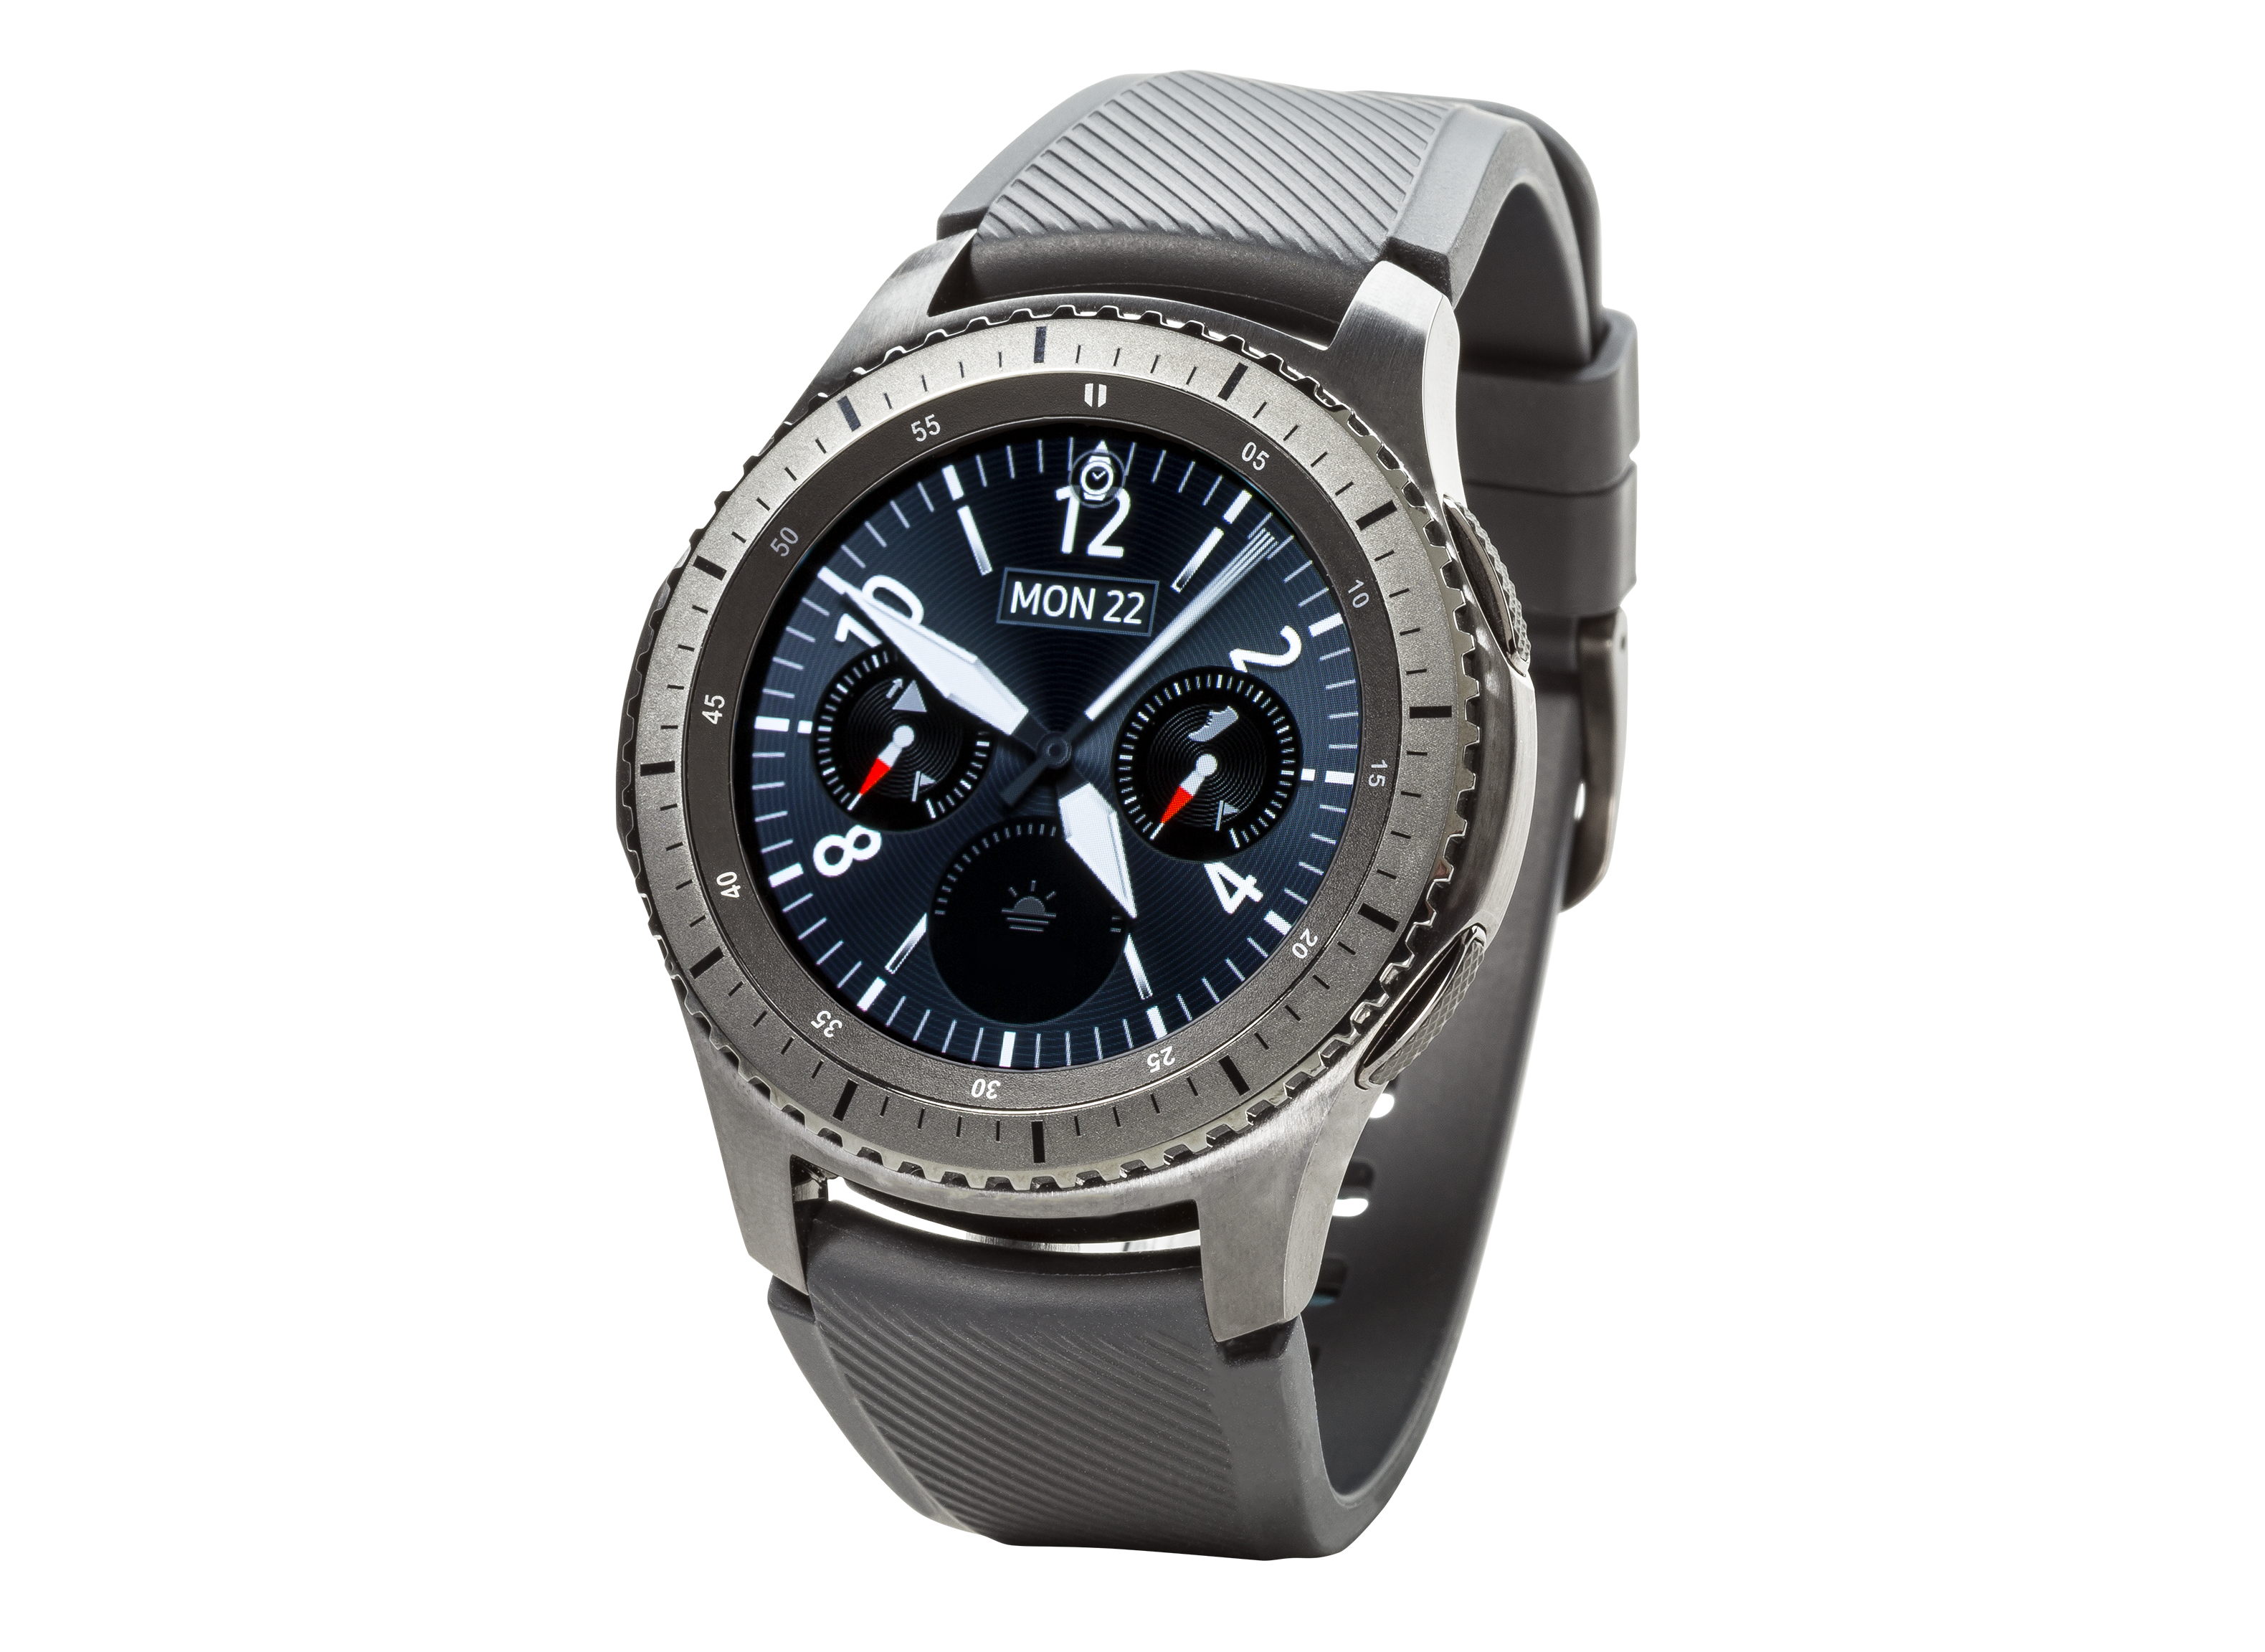 Samsung Gear S3 Smartwatch - Consumer Reports